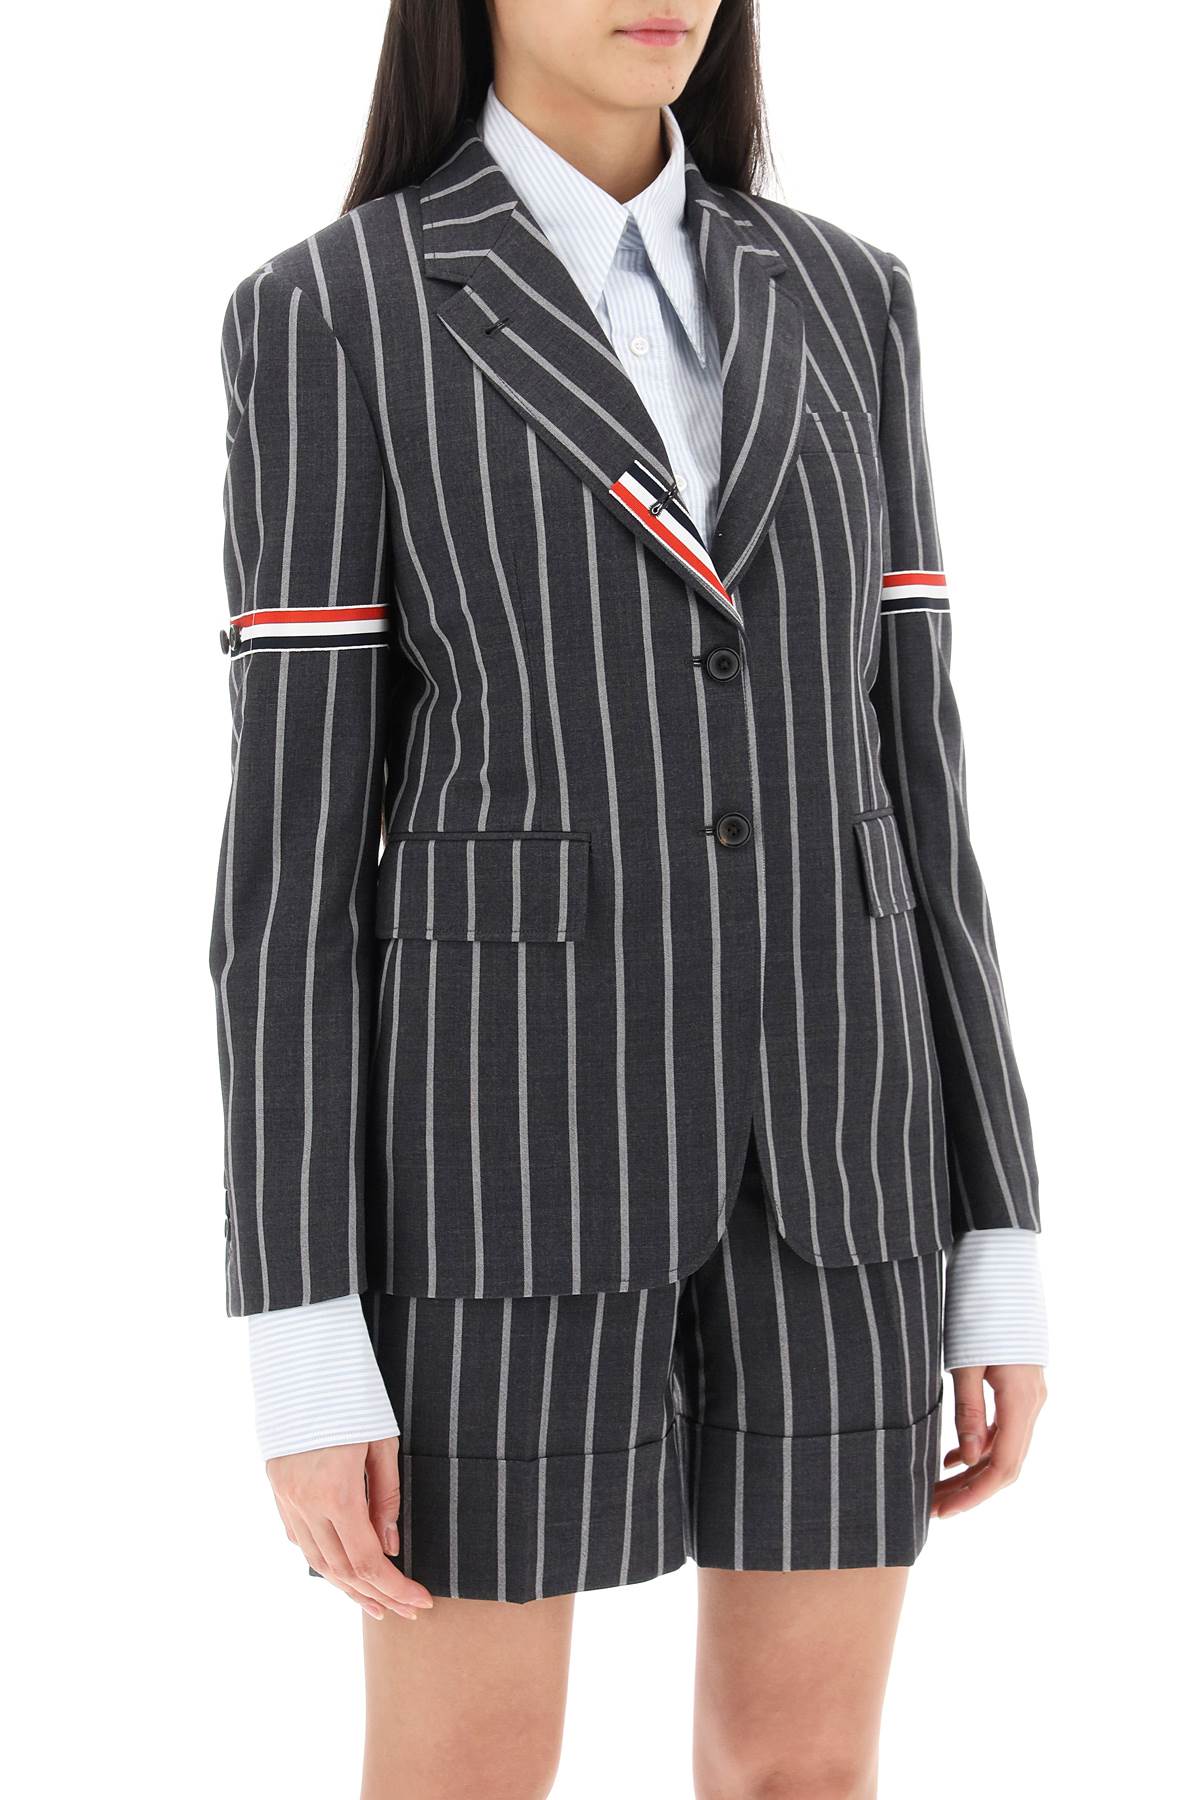 Thom browne striped single-breasted jacket-1